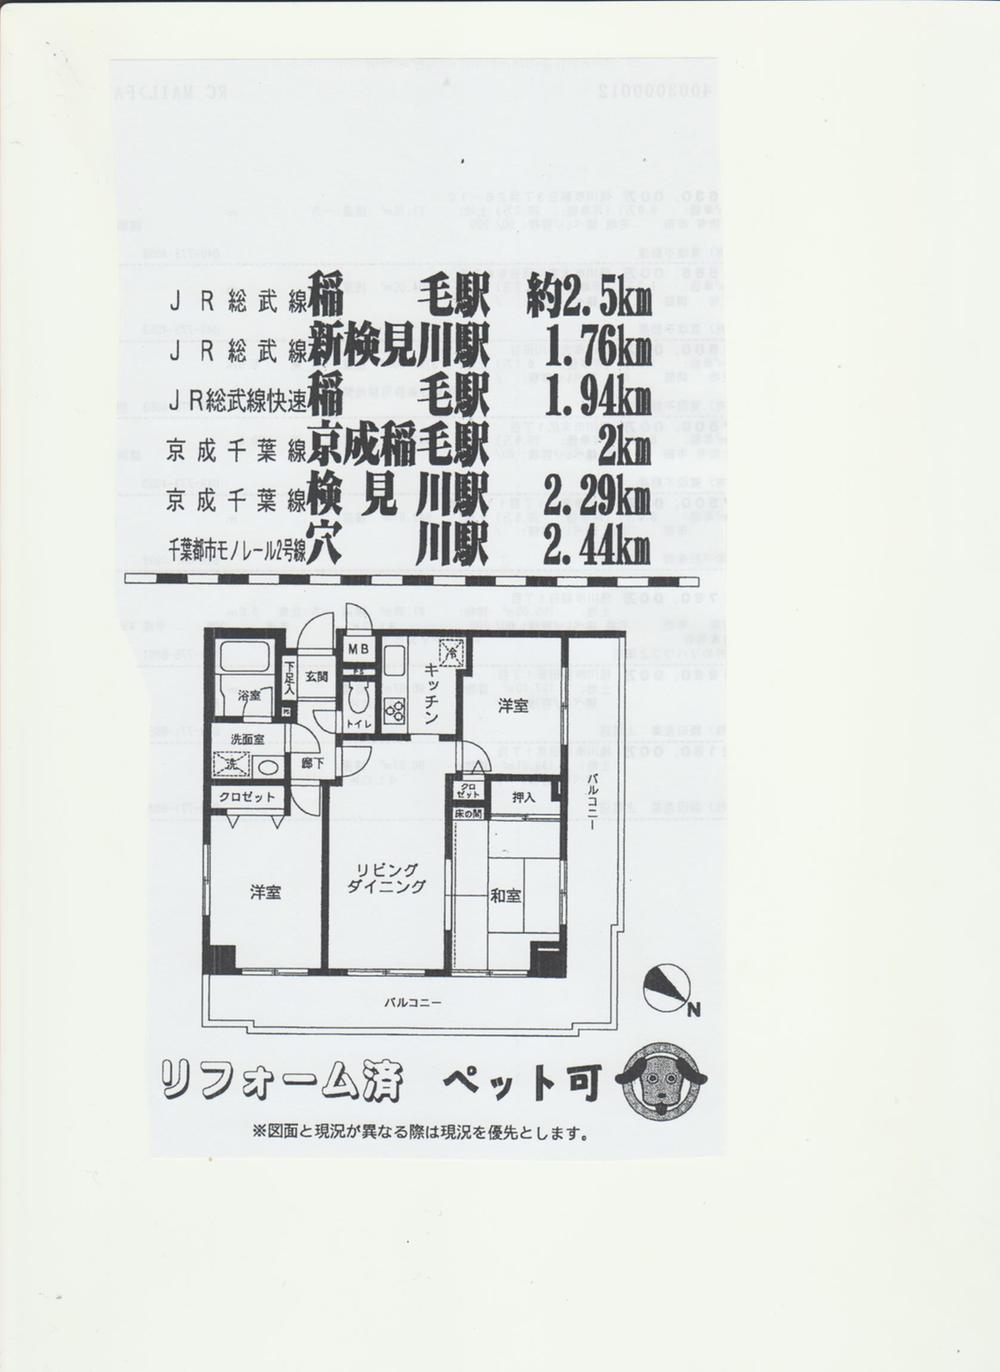 Floor plan. 3LDK, Price 10.8 million yen, Occupied area 71.75 sq m , Balcony area 22.82 sq m